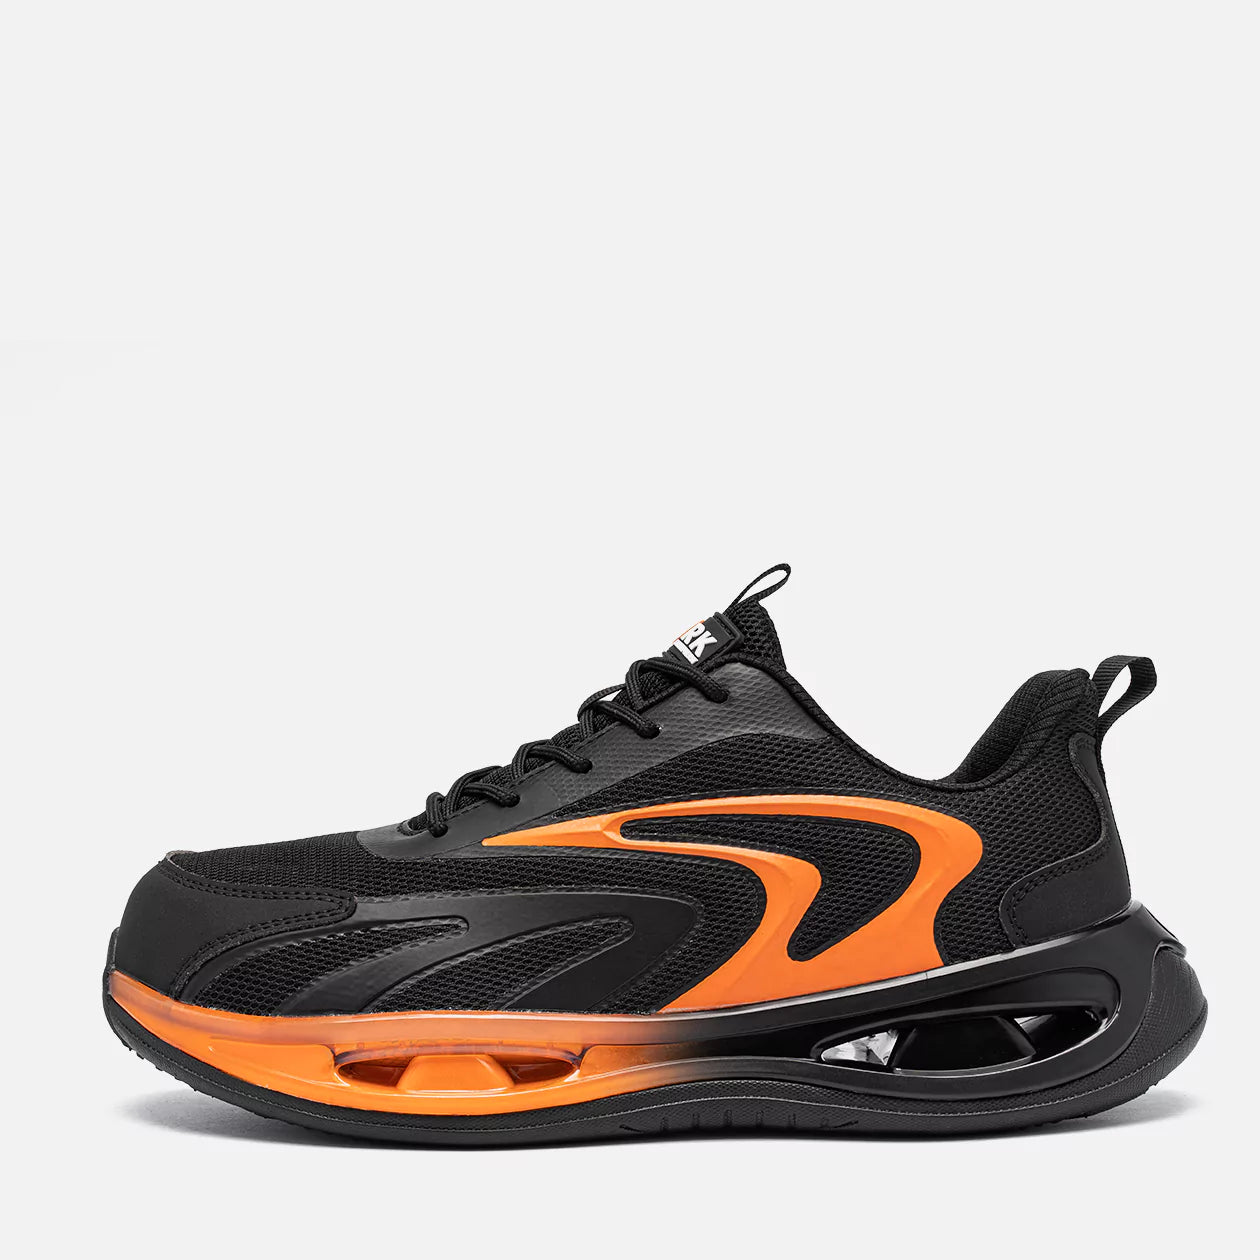 Larnmern 21094 steel toe sneakers for men, orange